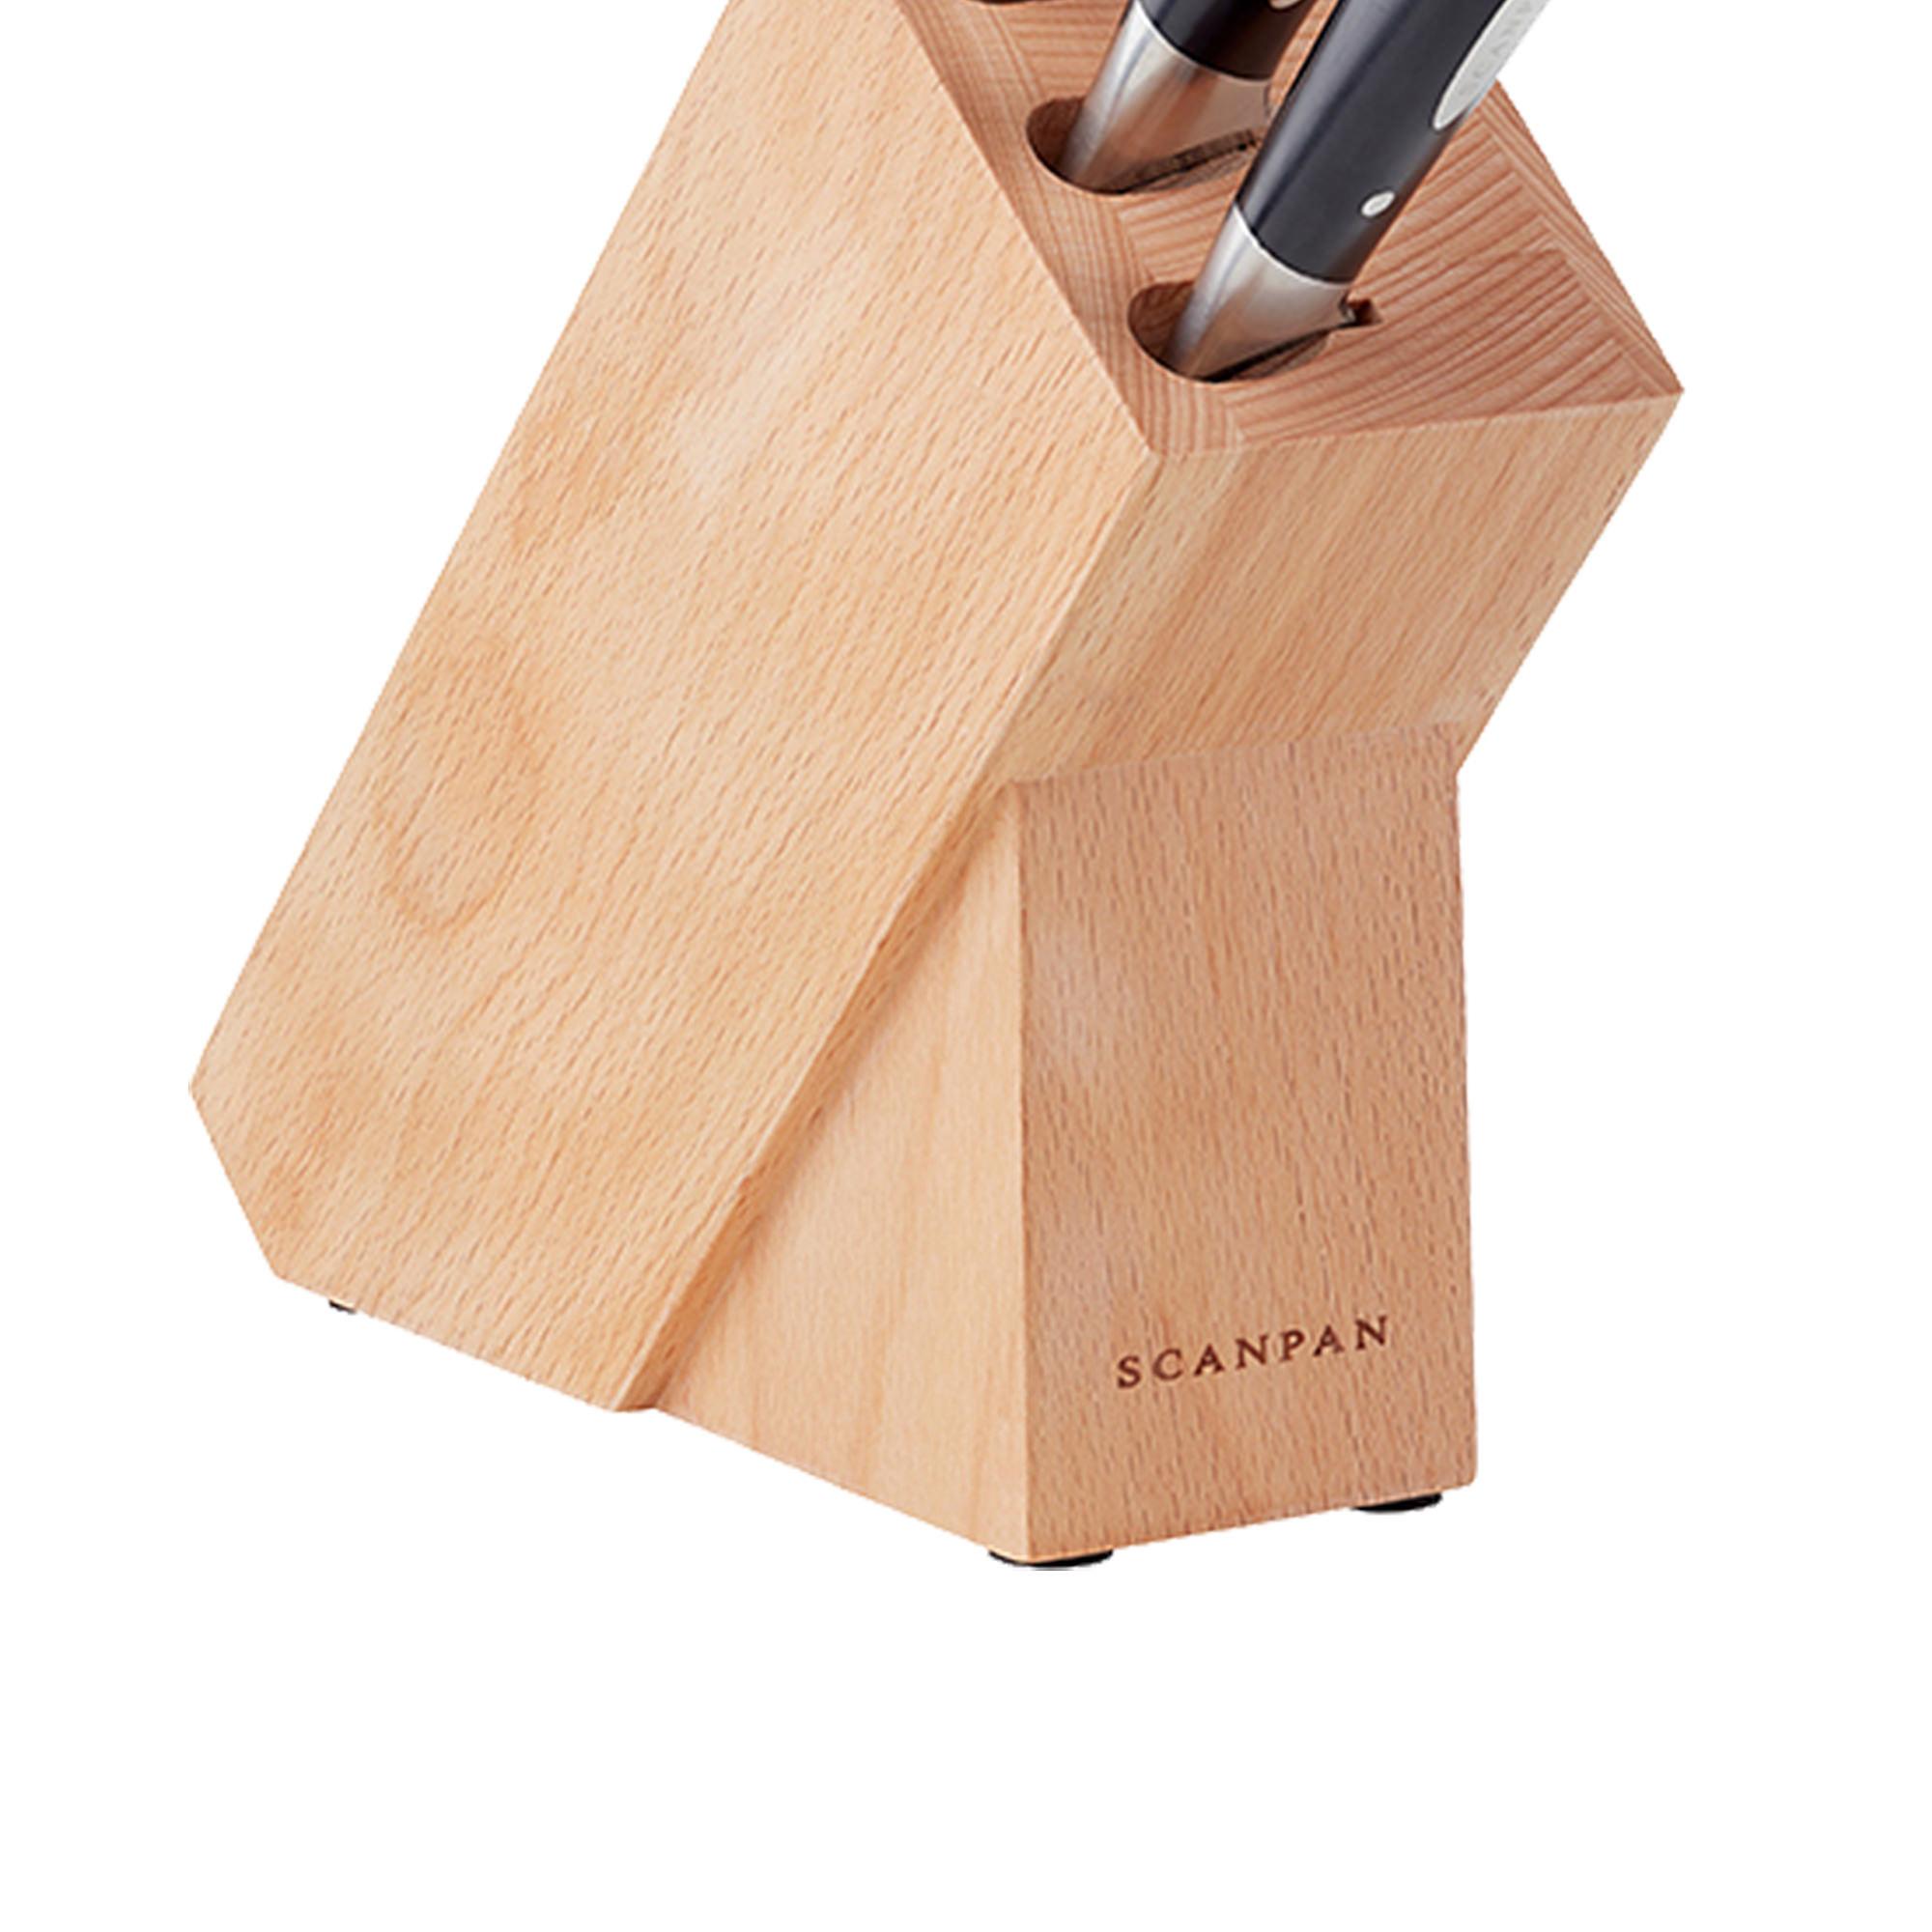 Scanpan Classic 4pc Knife Block Set Image 2